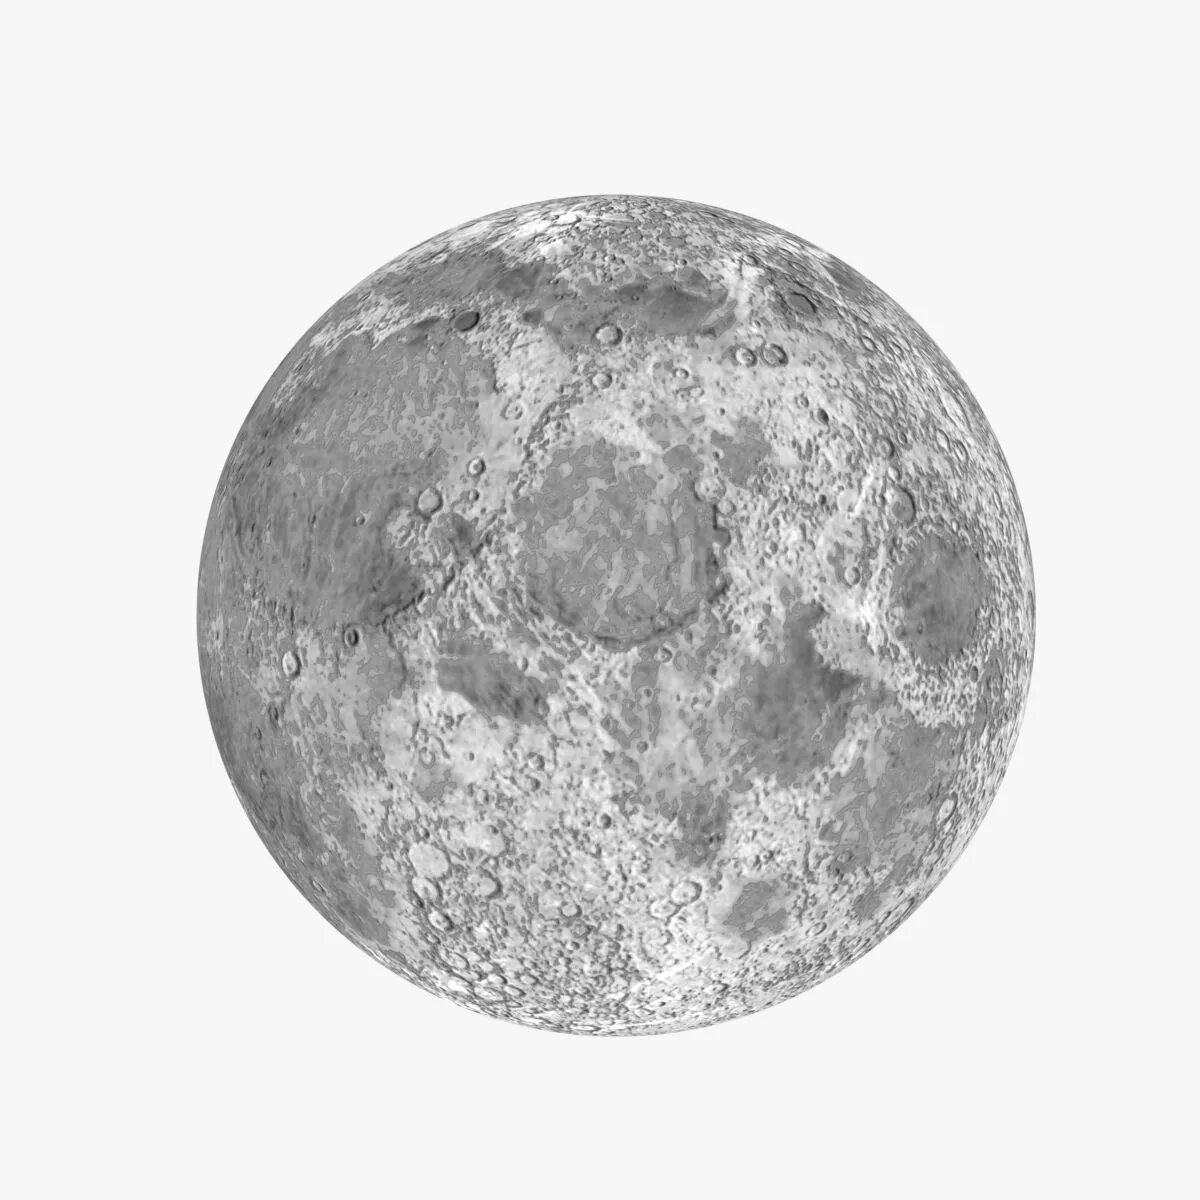 3ds модель Луны. Луна 3d модель. Трехмерная модель Луны. Луна макет 3д.